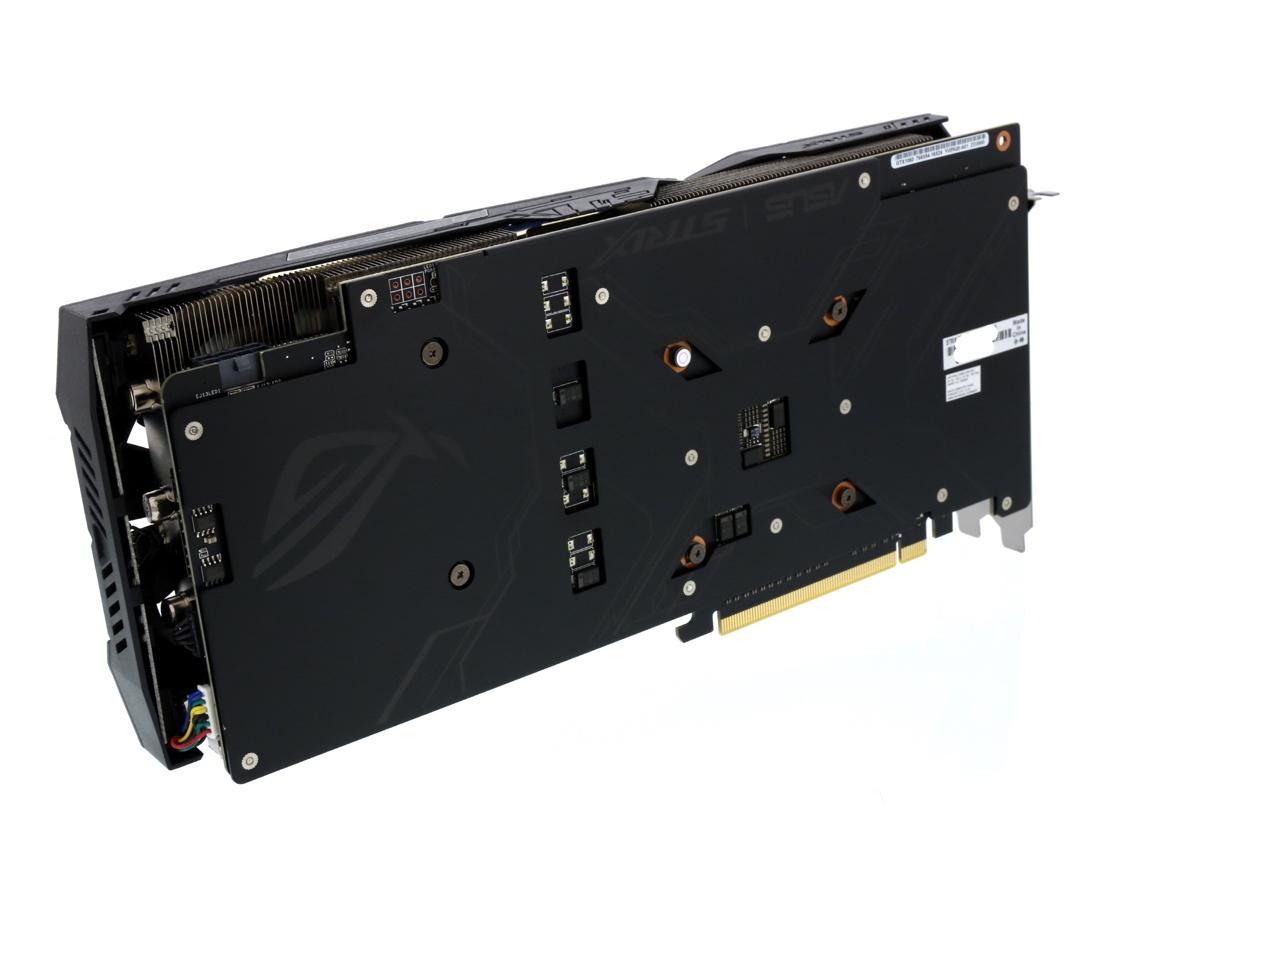 ASUS ROG GeForce GTX 1060 Video Card STRIX-GTX1060-O6G-GAMING 